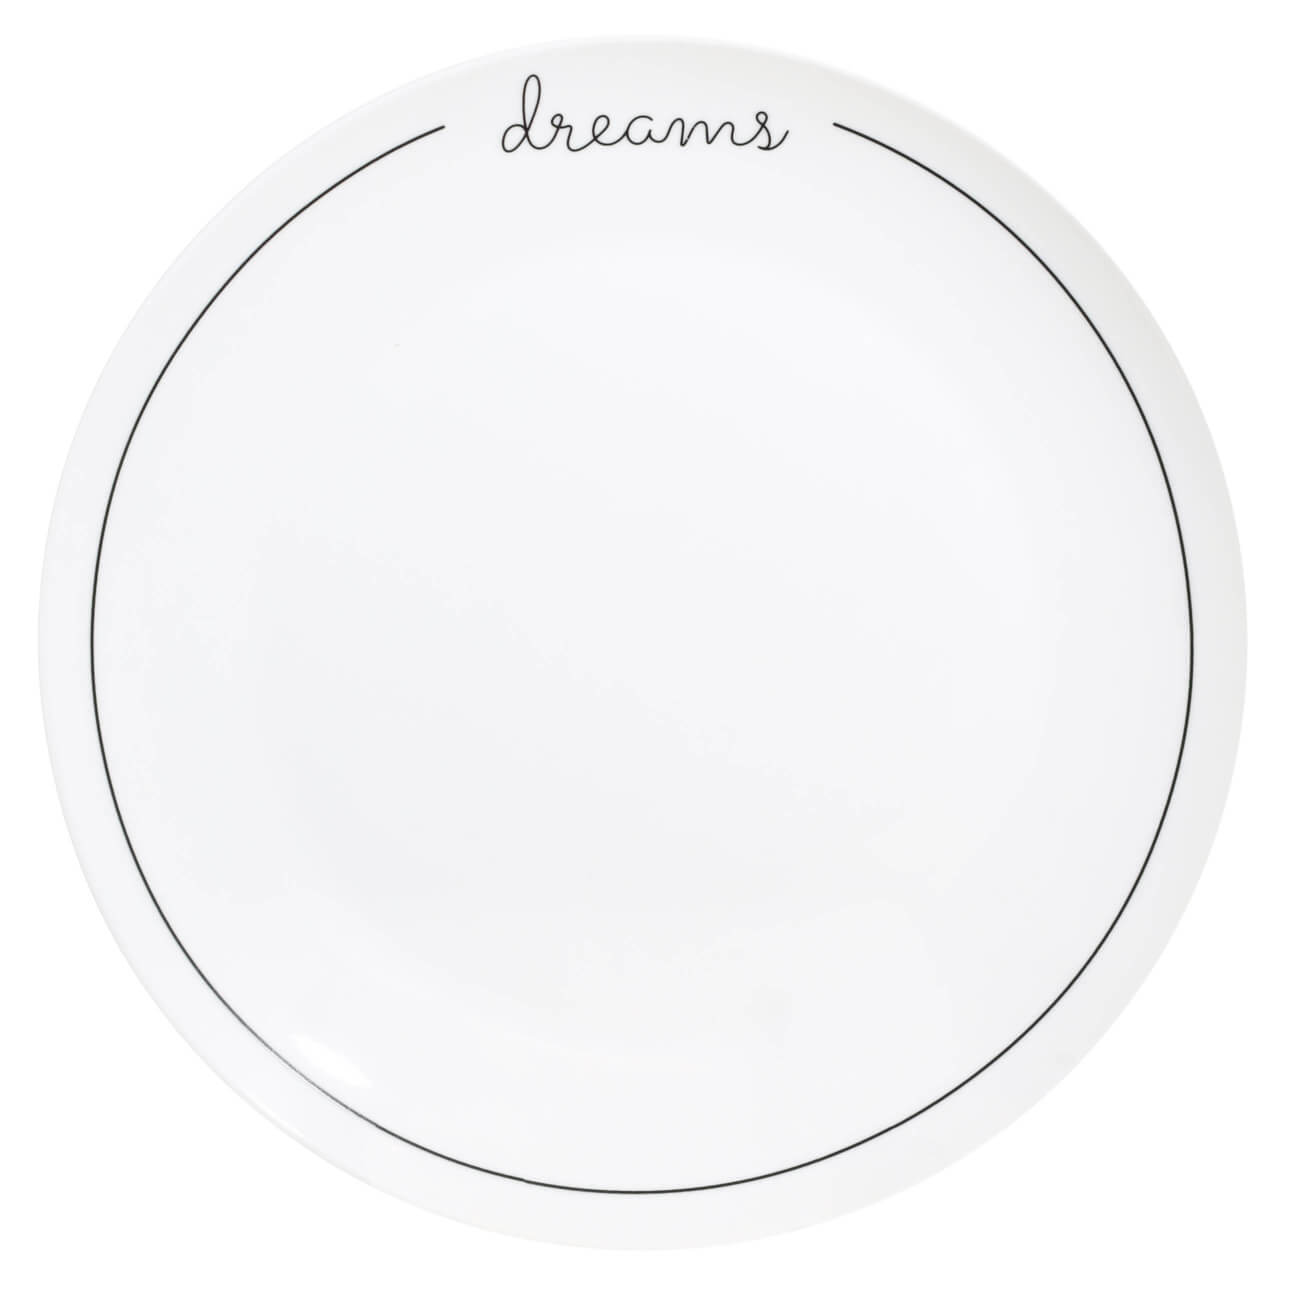 Тарелка обеденная, 27 см, фарфор N, белая, Dreams, Scroll white тарелка обеденная wedgwood wgw 40003894 гибискус 27 см